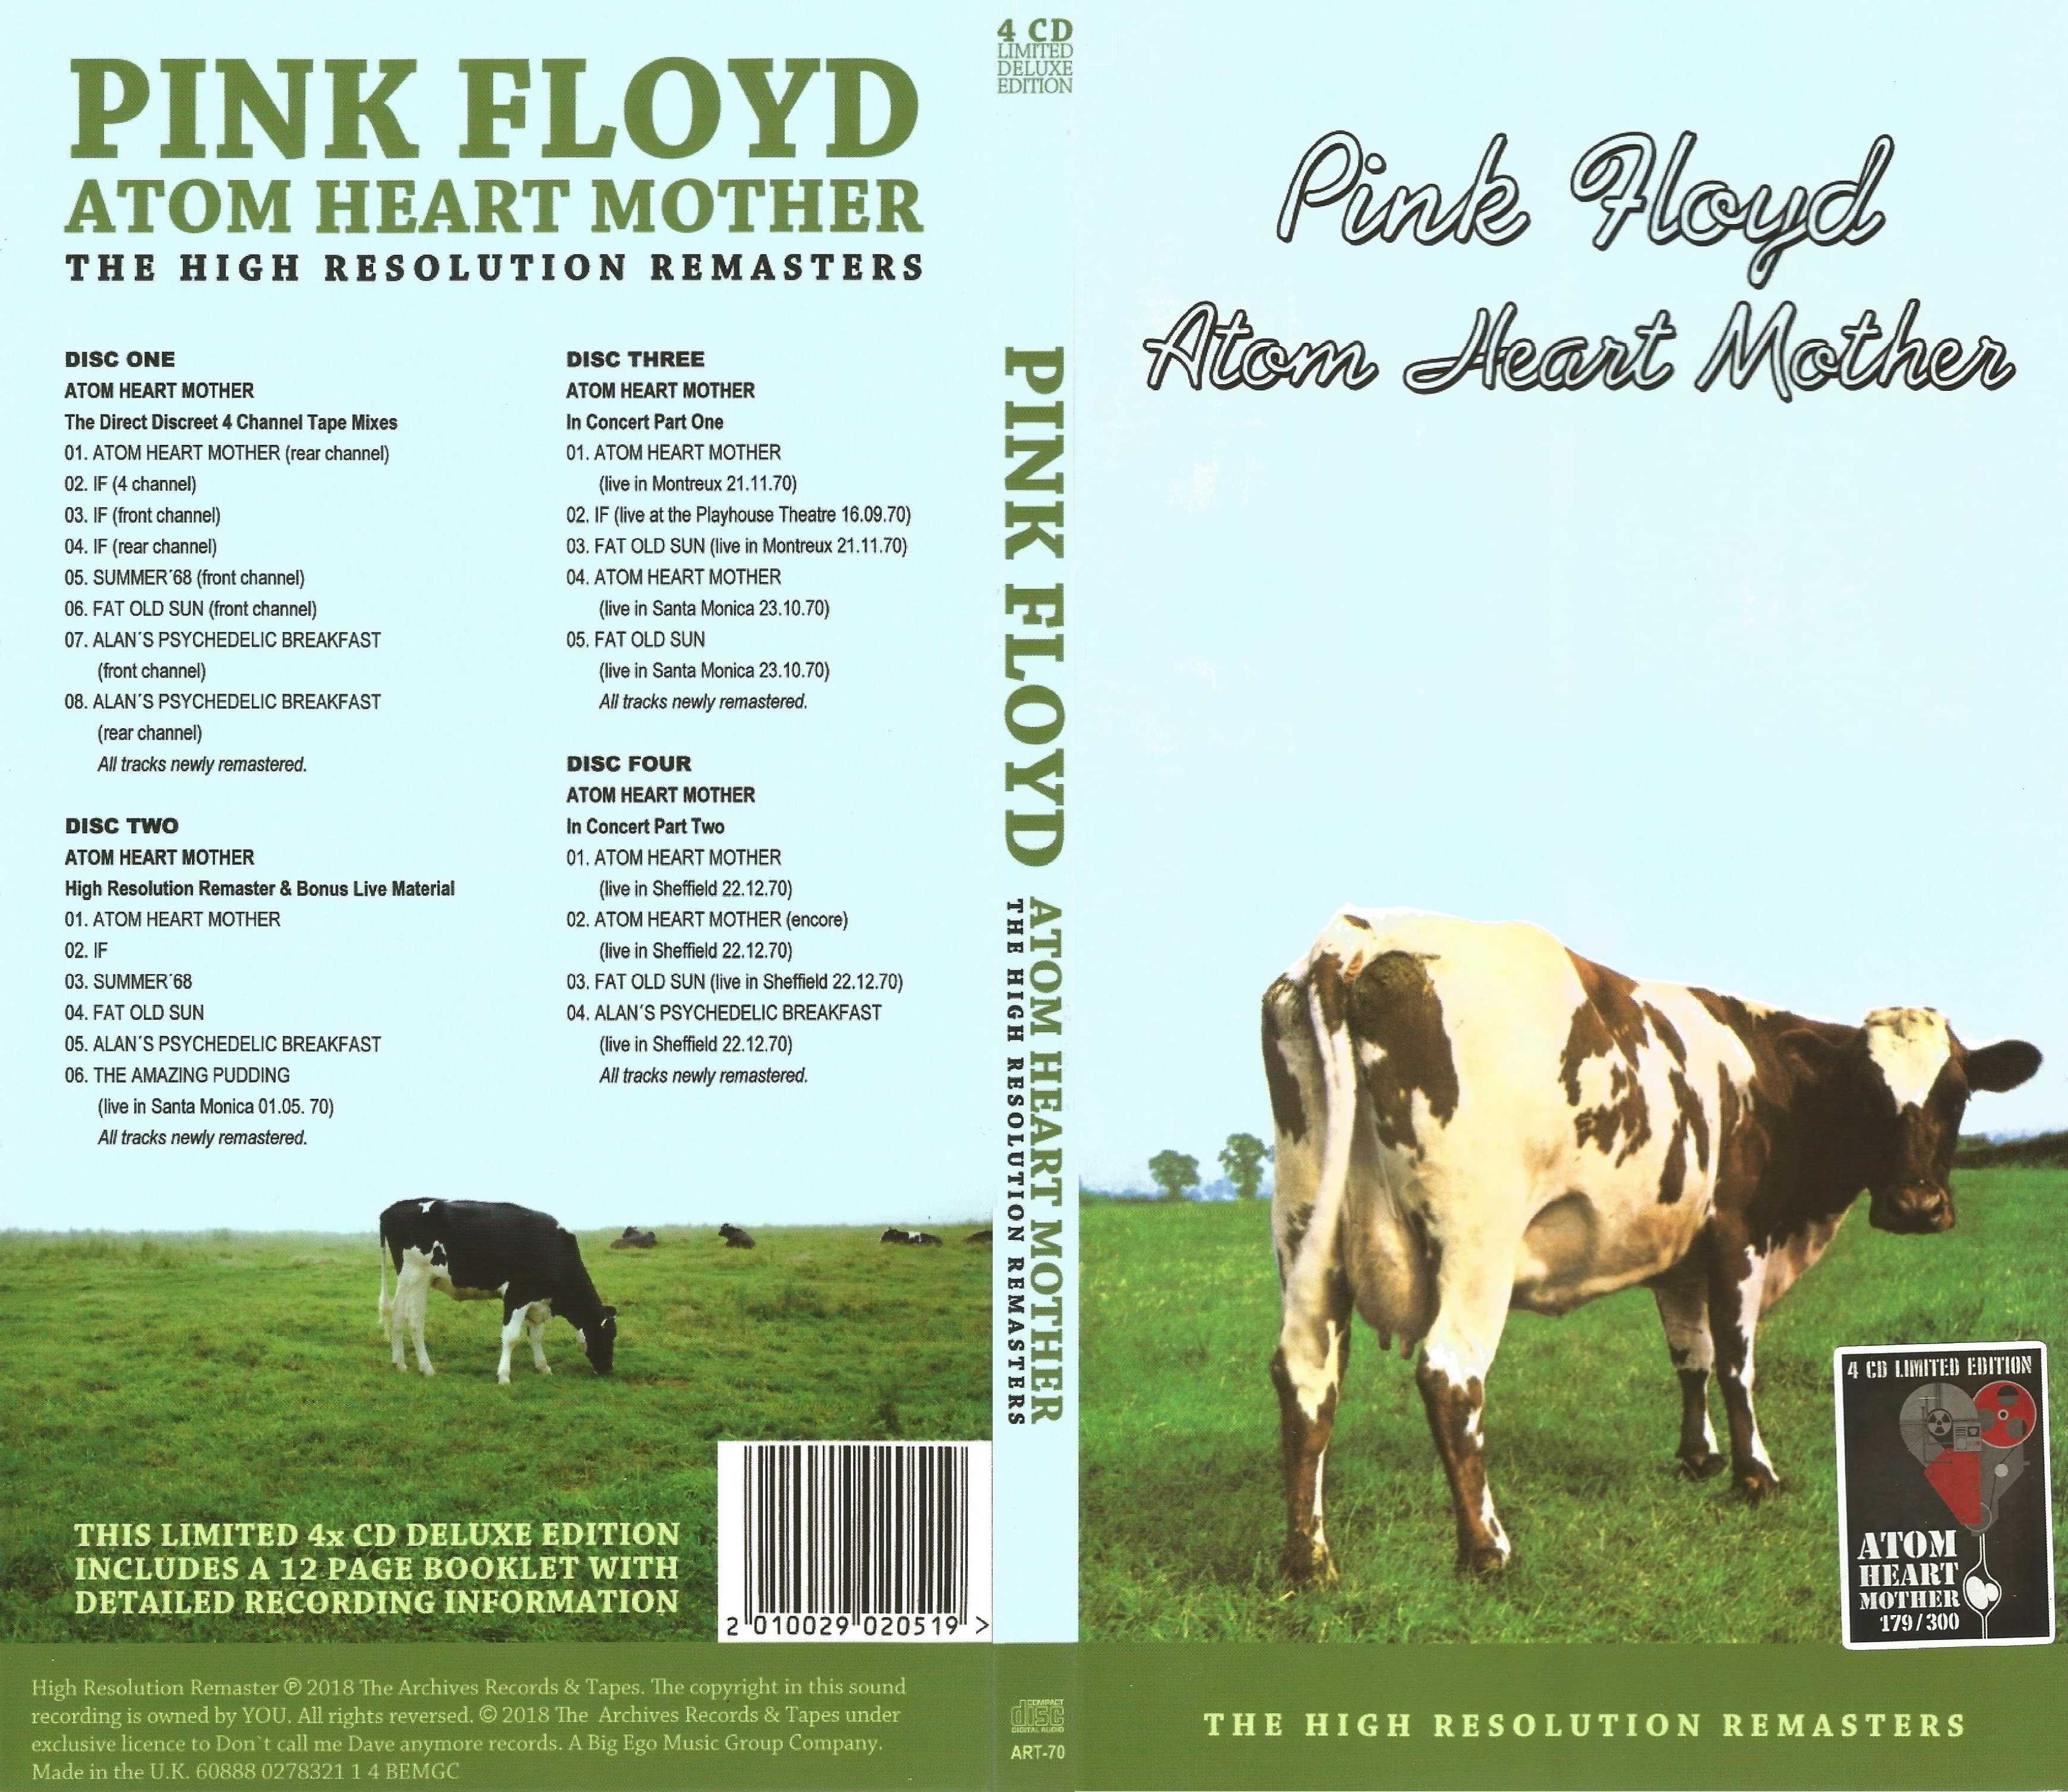 Pink floyd - группа, перевернувшая музыку